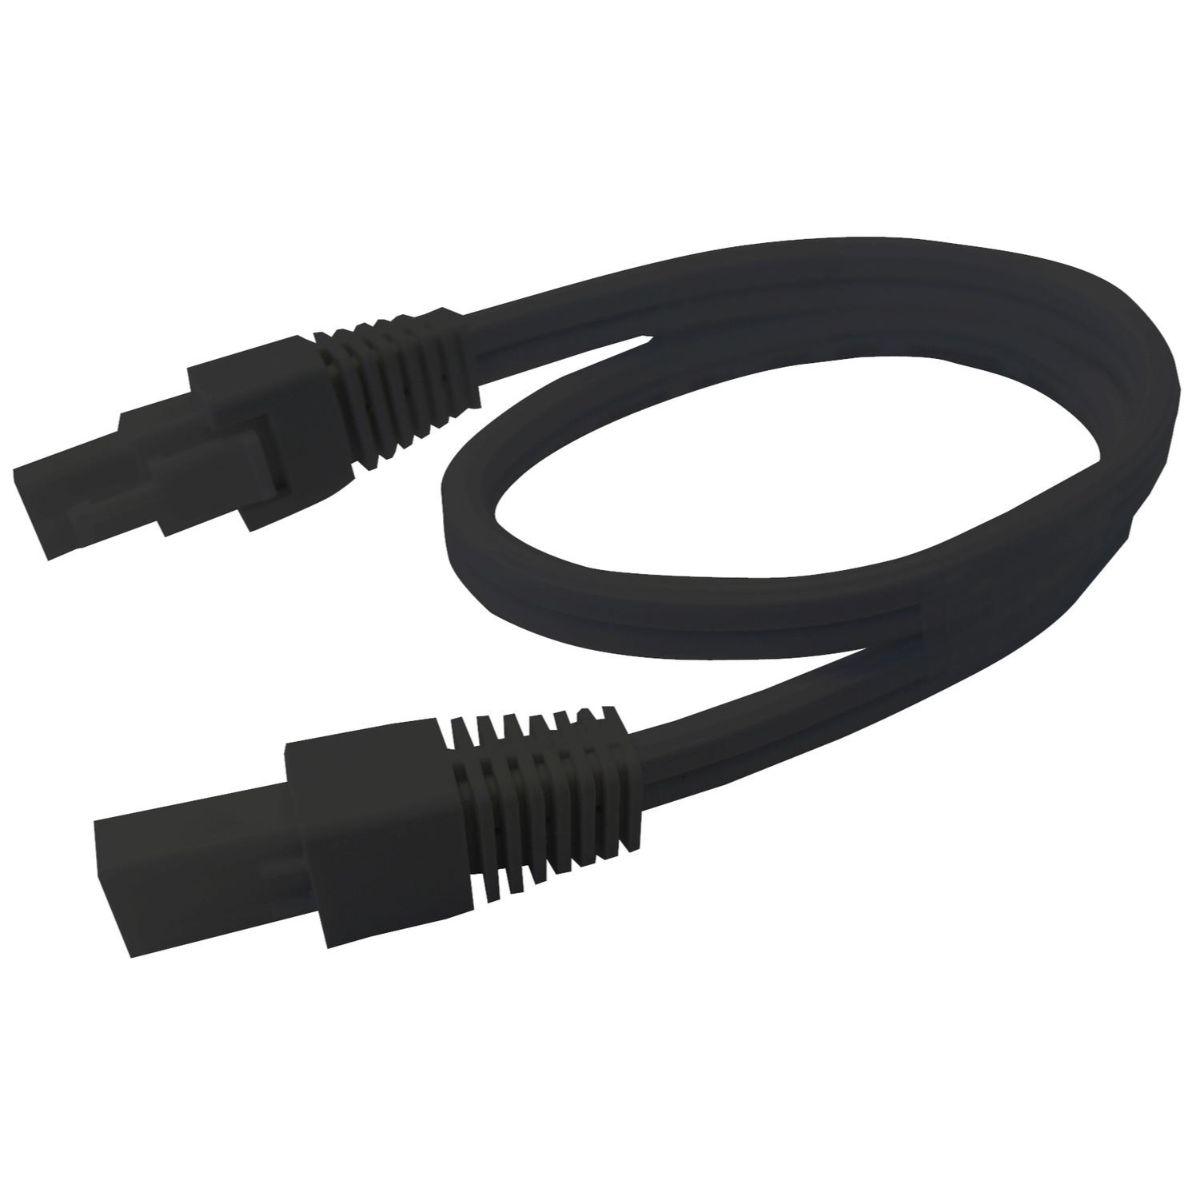 72in. Interconnect Cord for Elena Task Lighting, Black